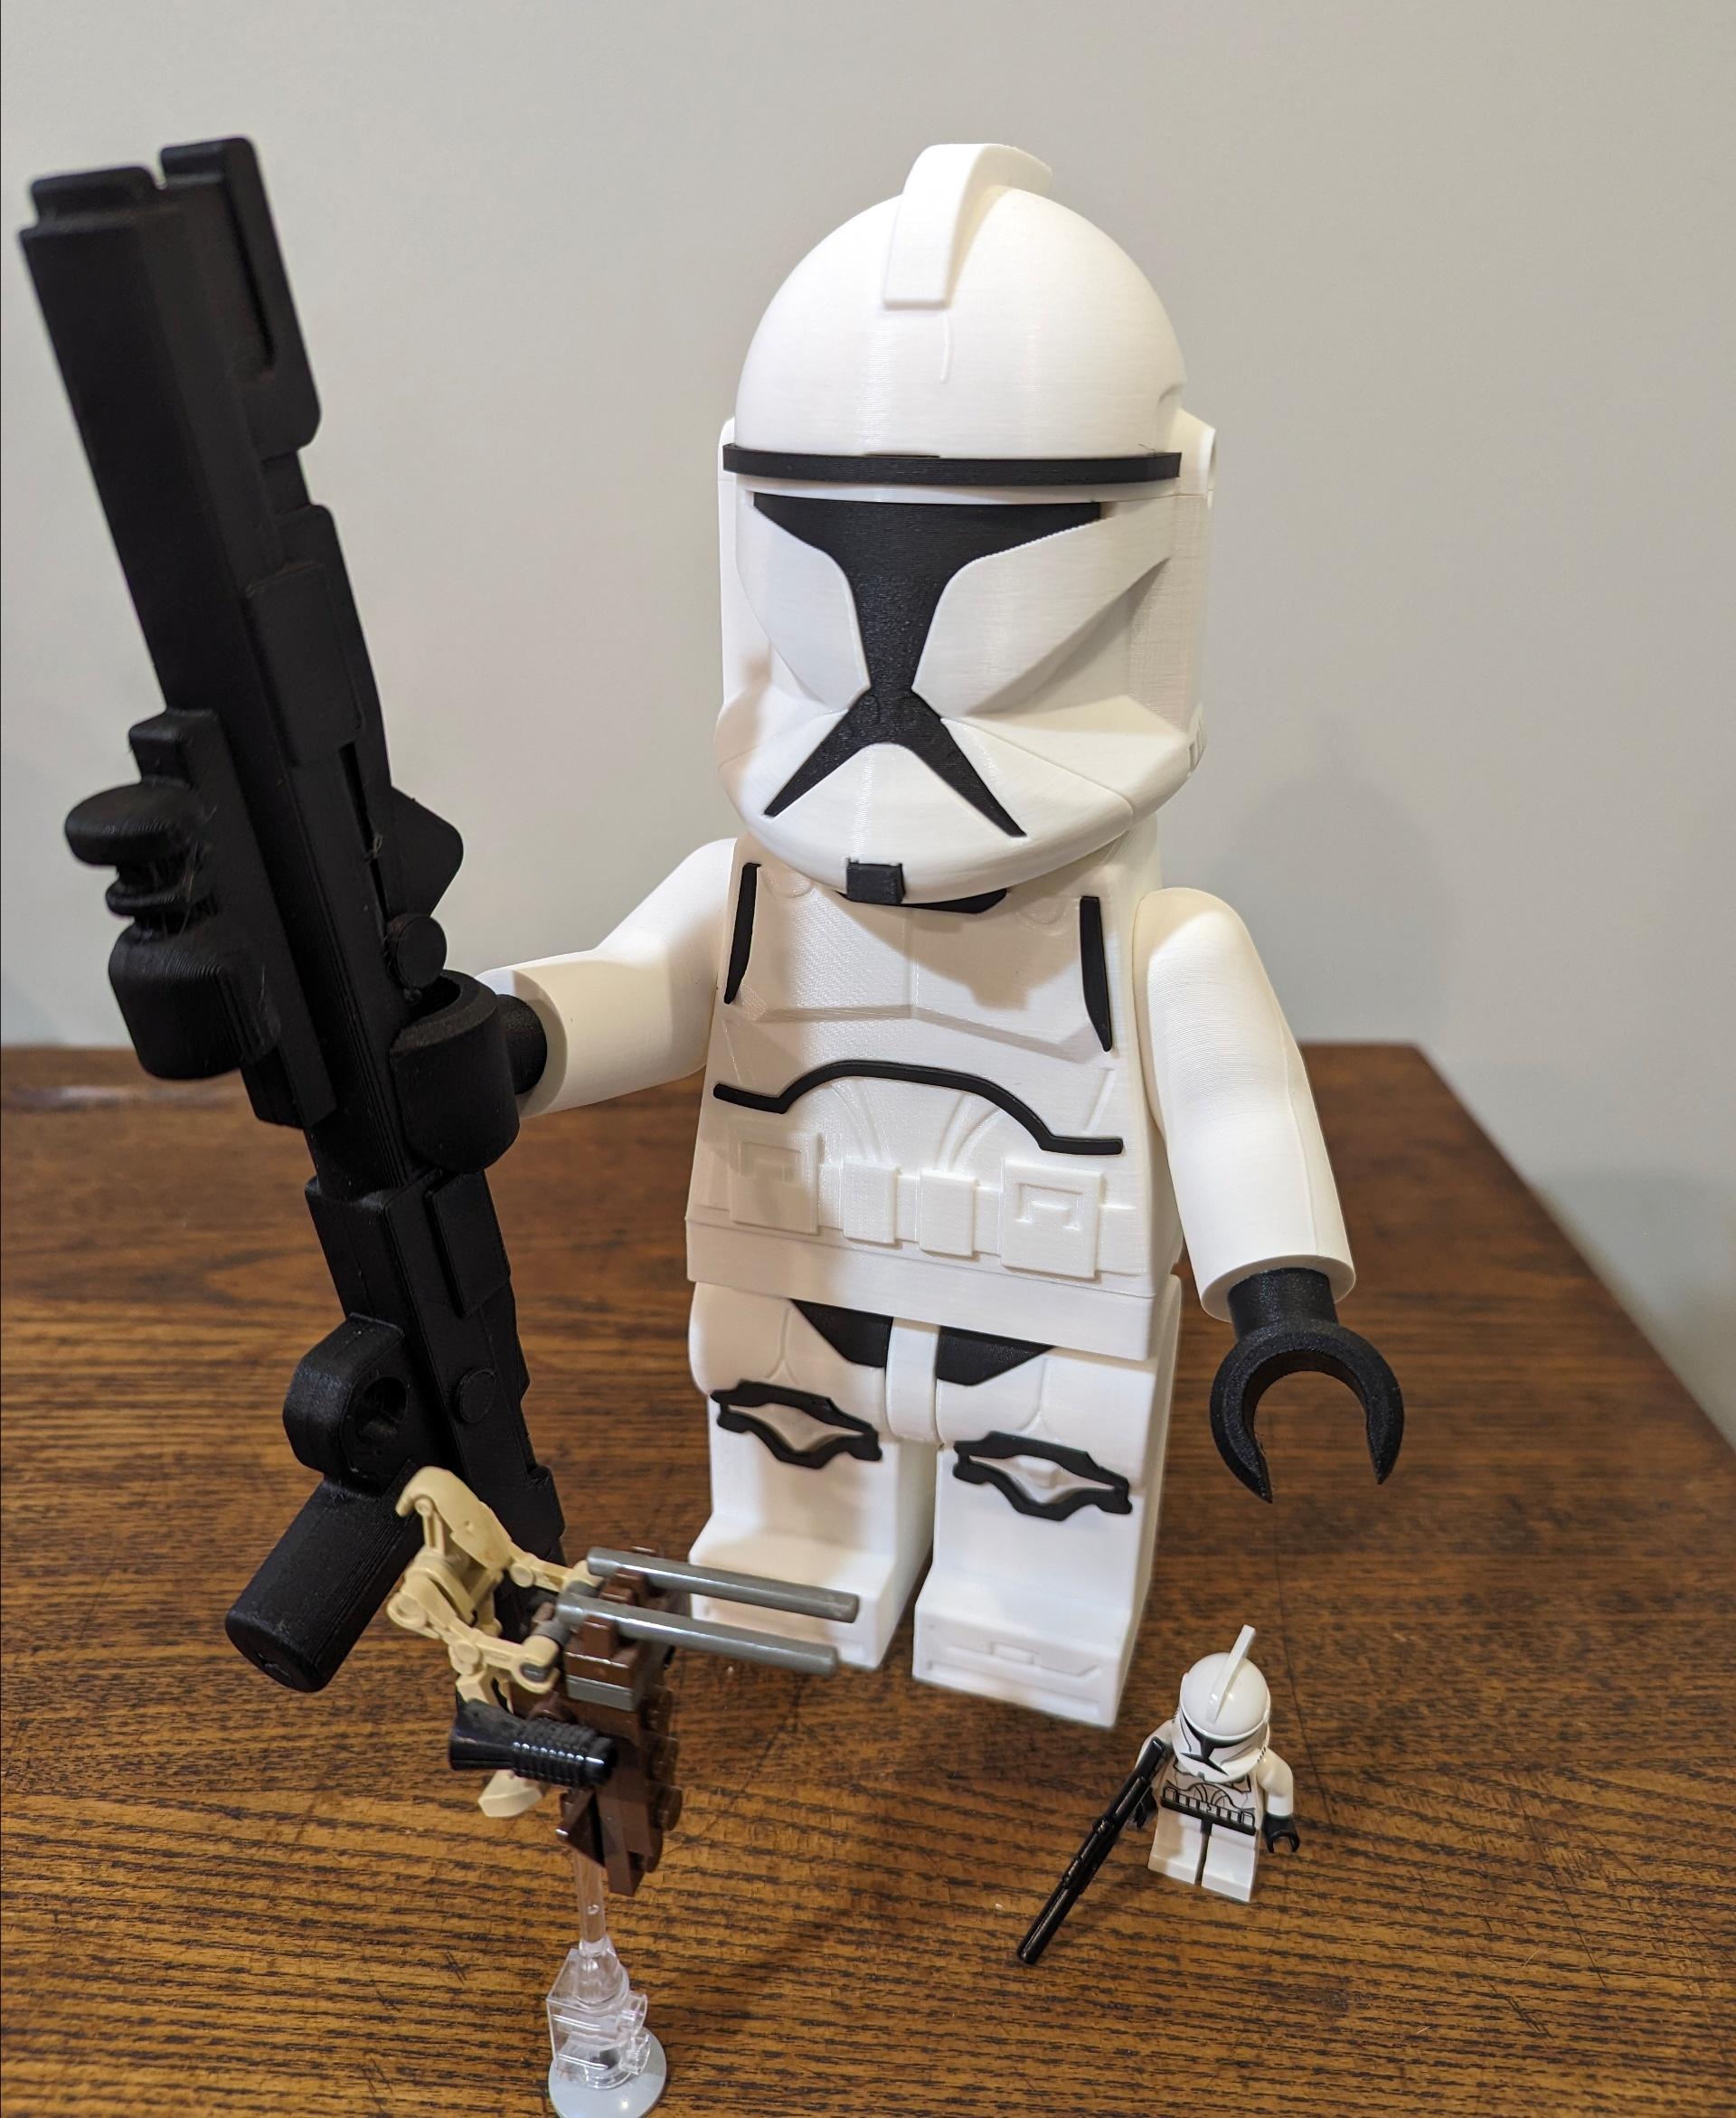 Clone Trooper - Phase I (6:1 LEGO-inspired brick figure, NO MMU/AMS, NO supports, NO glue) - Polymaker PolyLite White
ProtoPasta Matte Black Fiber - 3d model